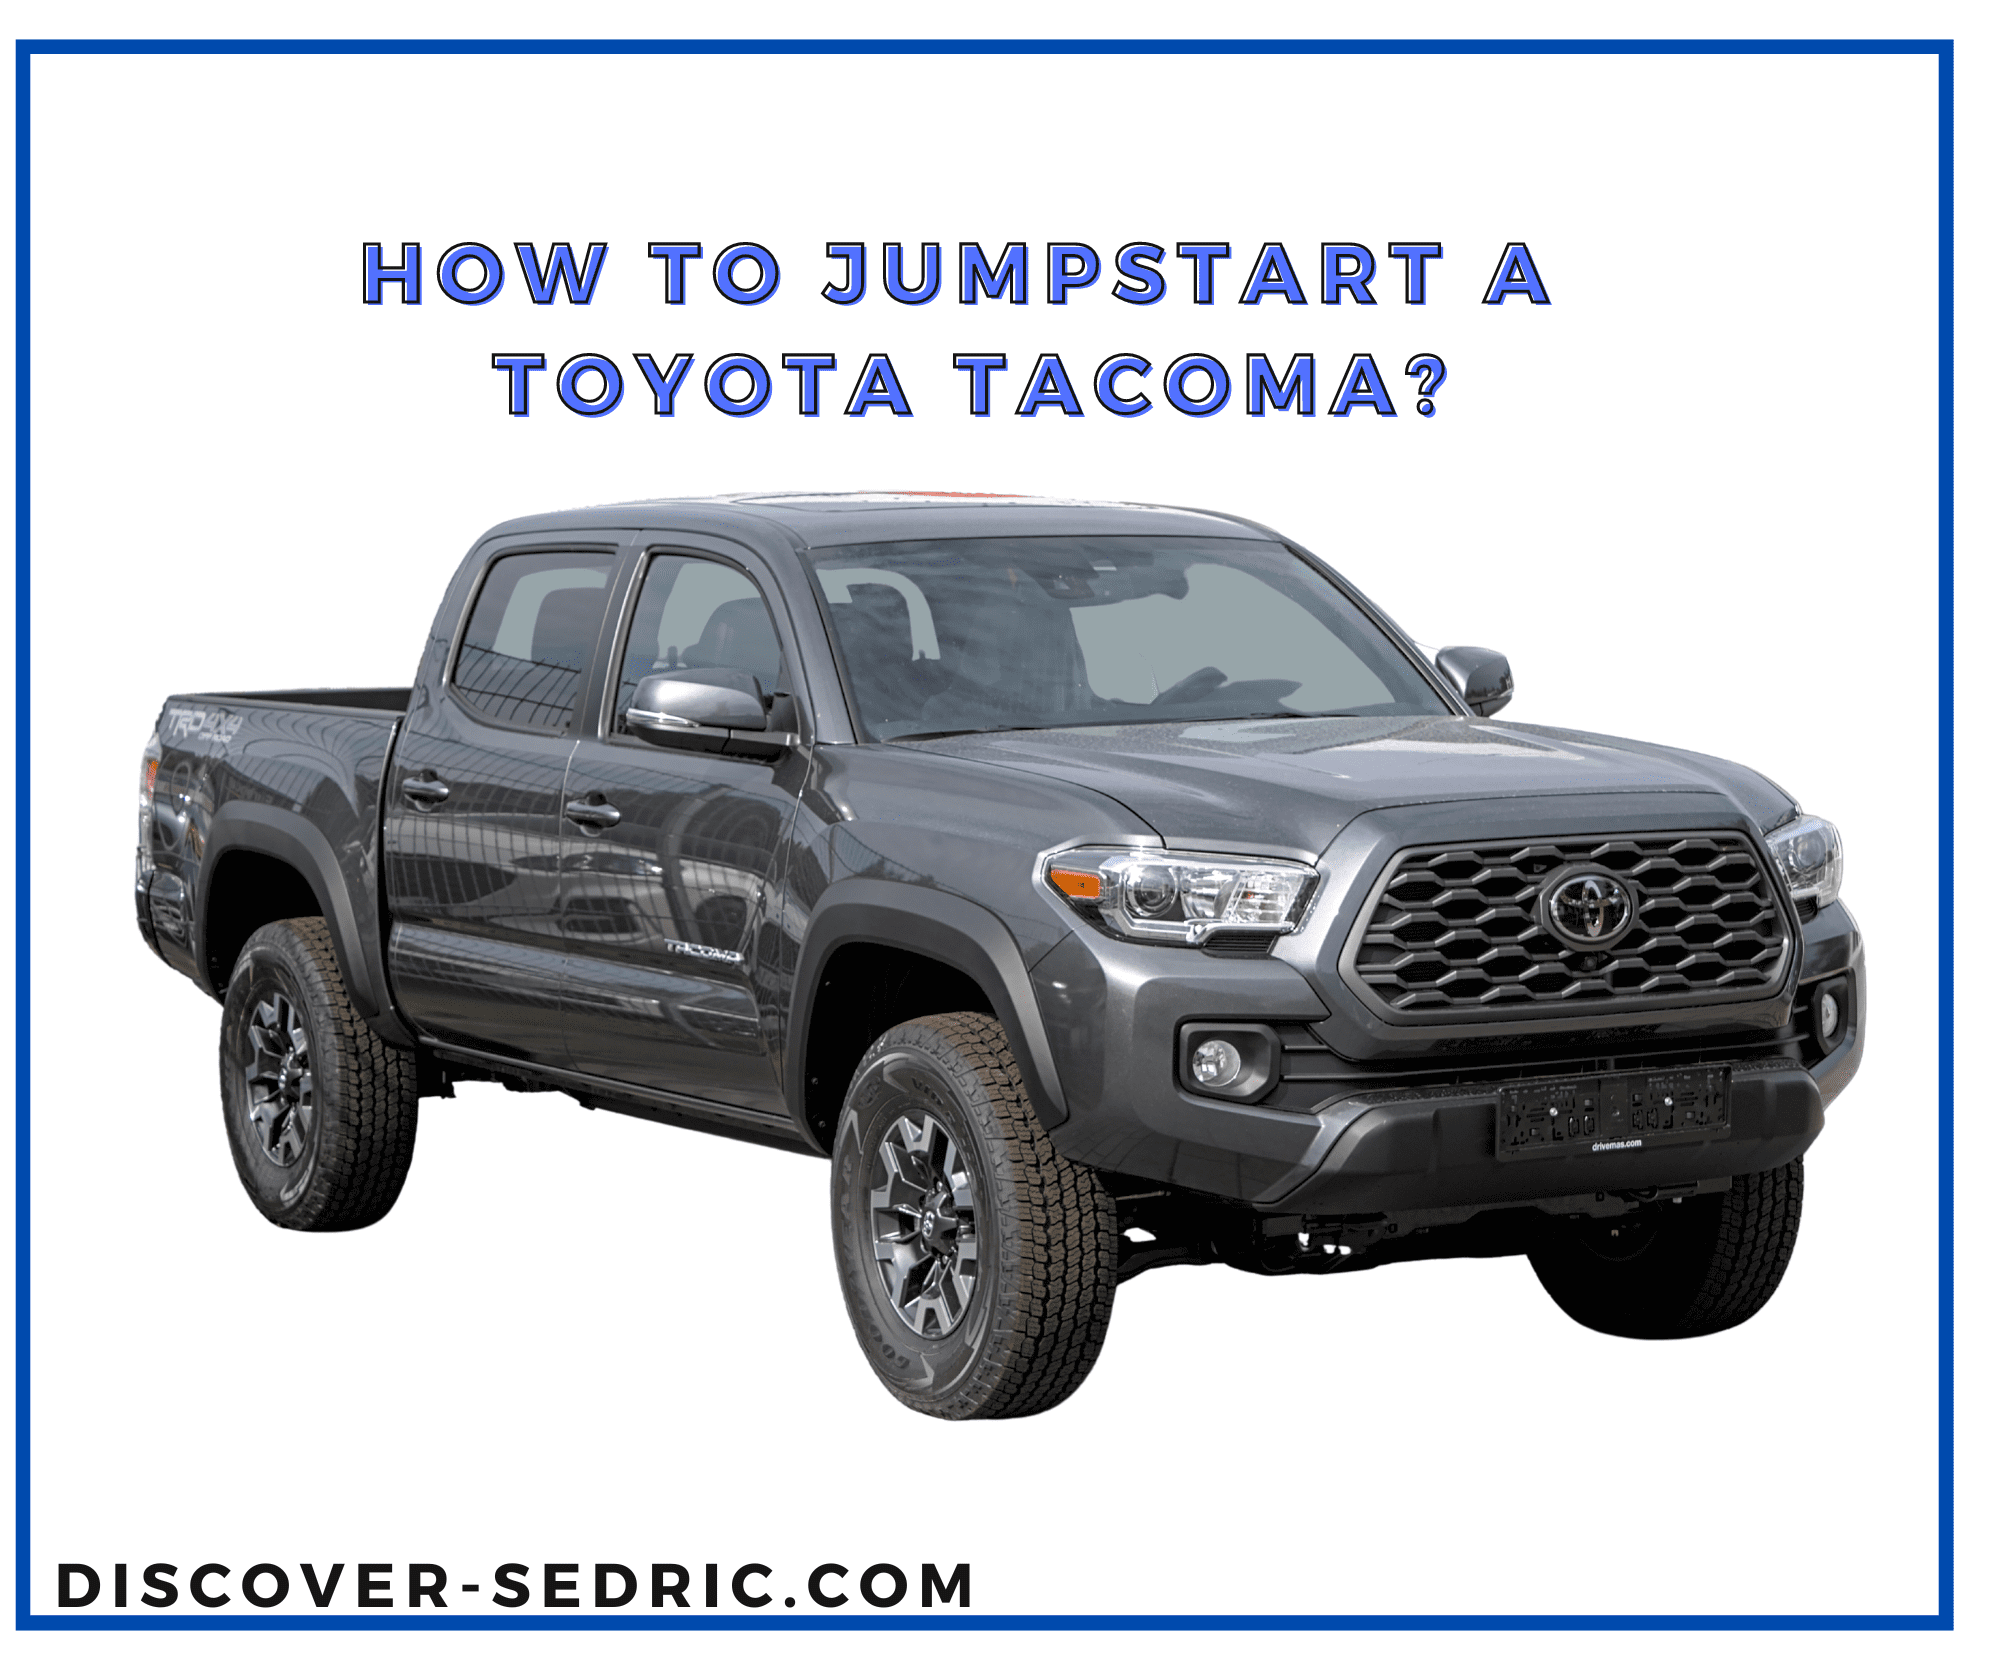 Jumpstart A Toyota Tacoma